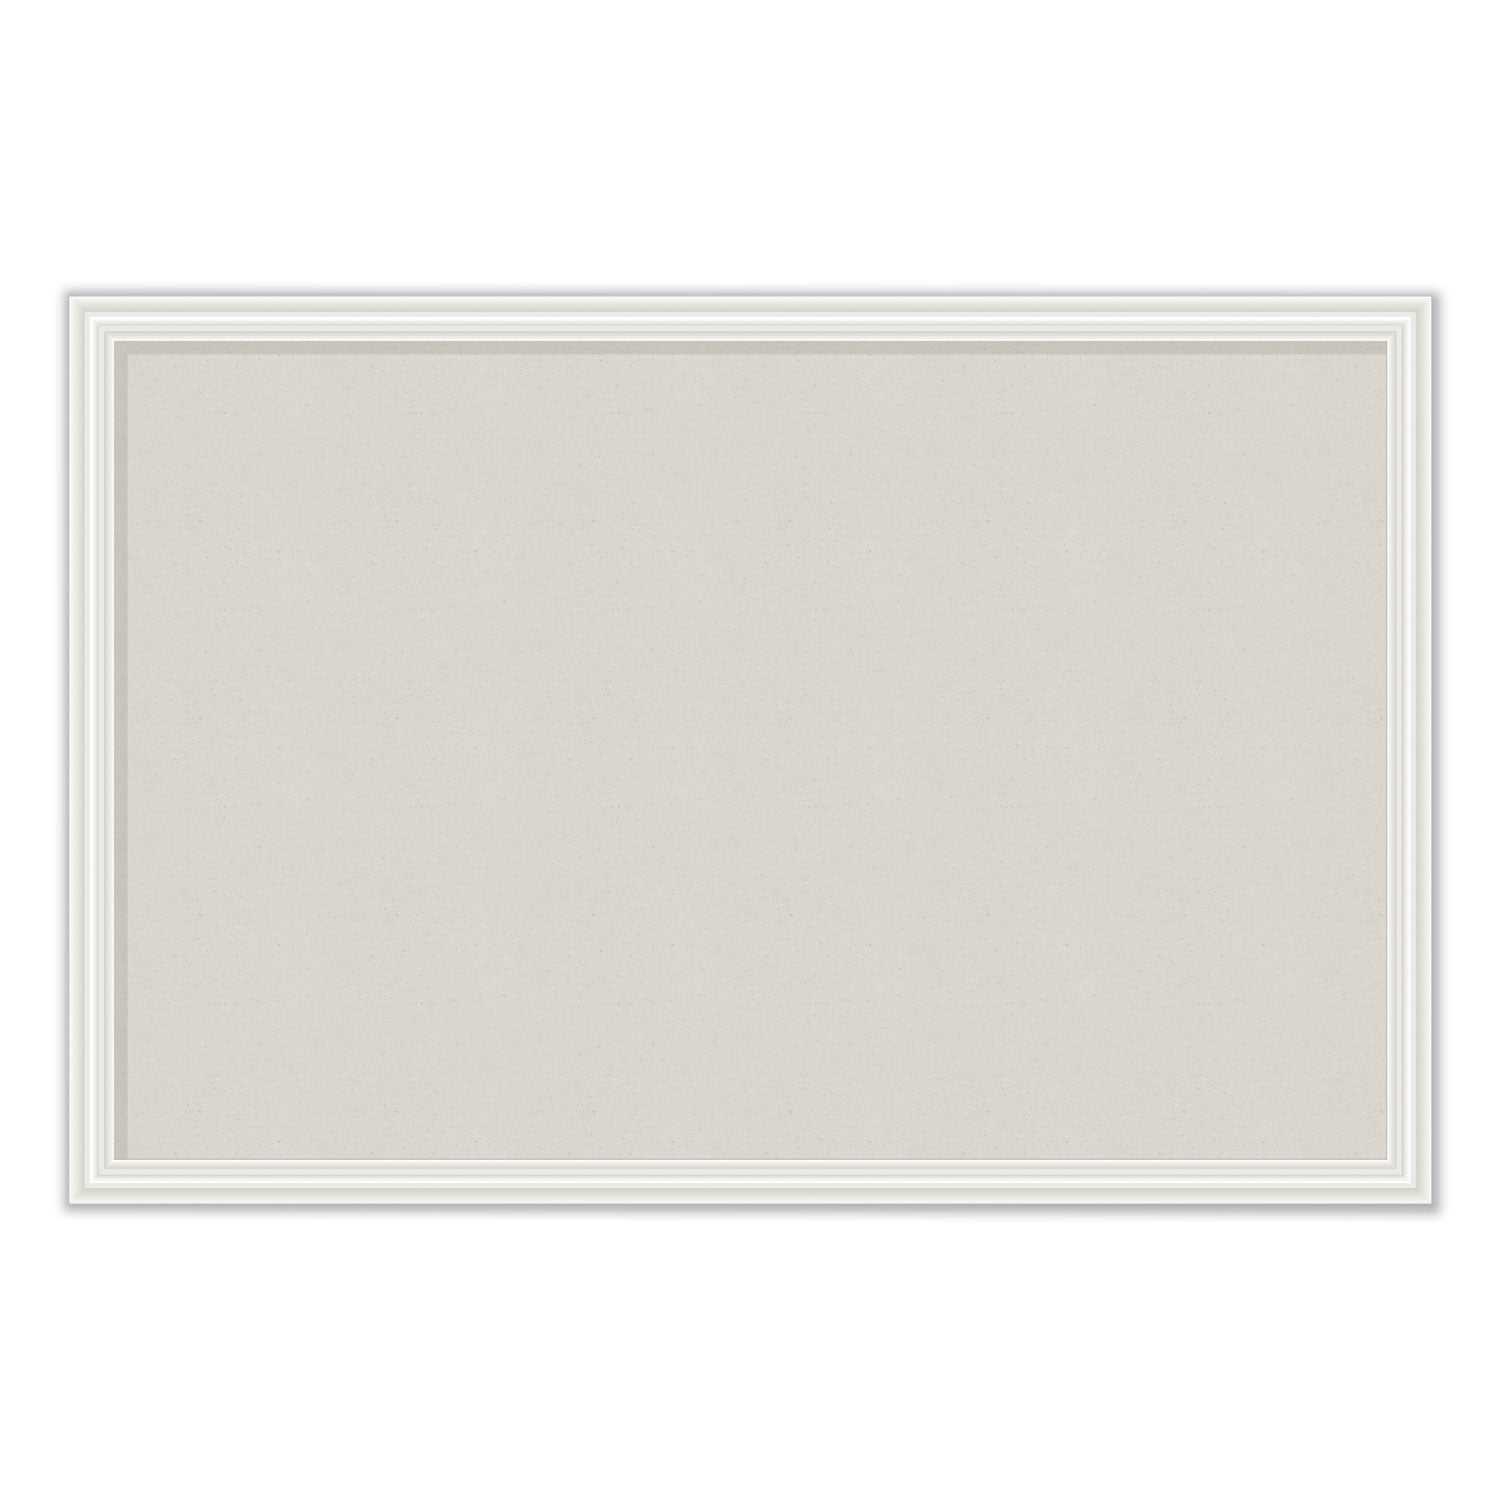 linen-bulletin-board-with-decor-frame-30-x-20-tan-surface-white-wood-frame_ubr2074u0001 - 1